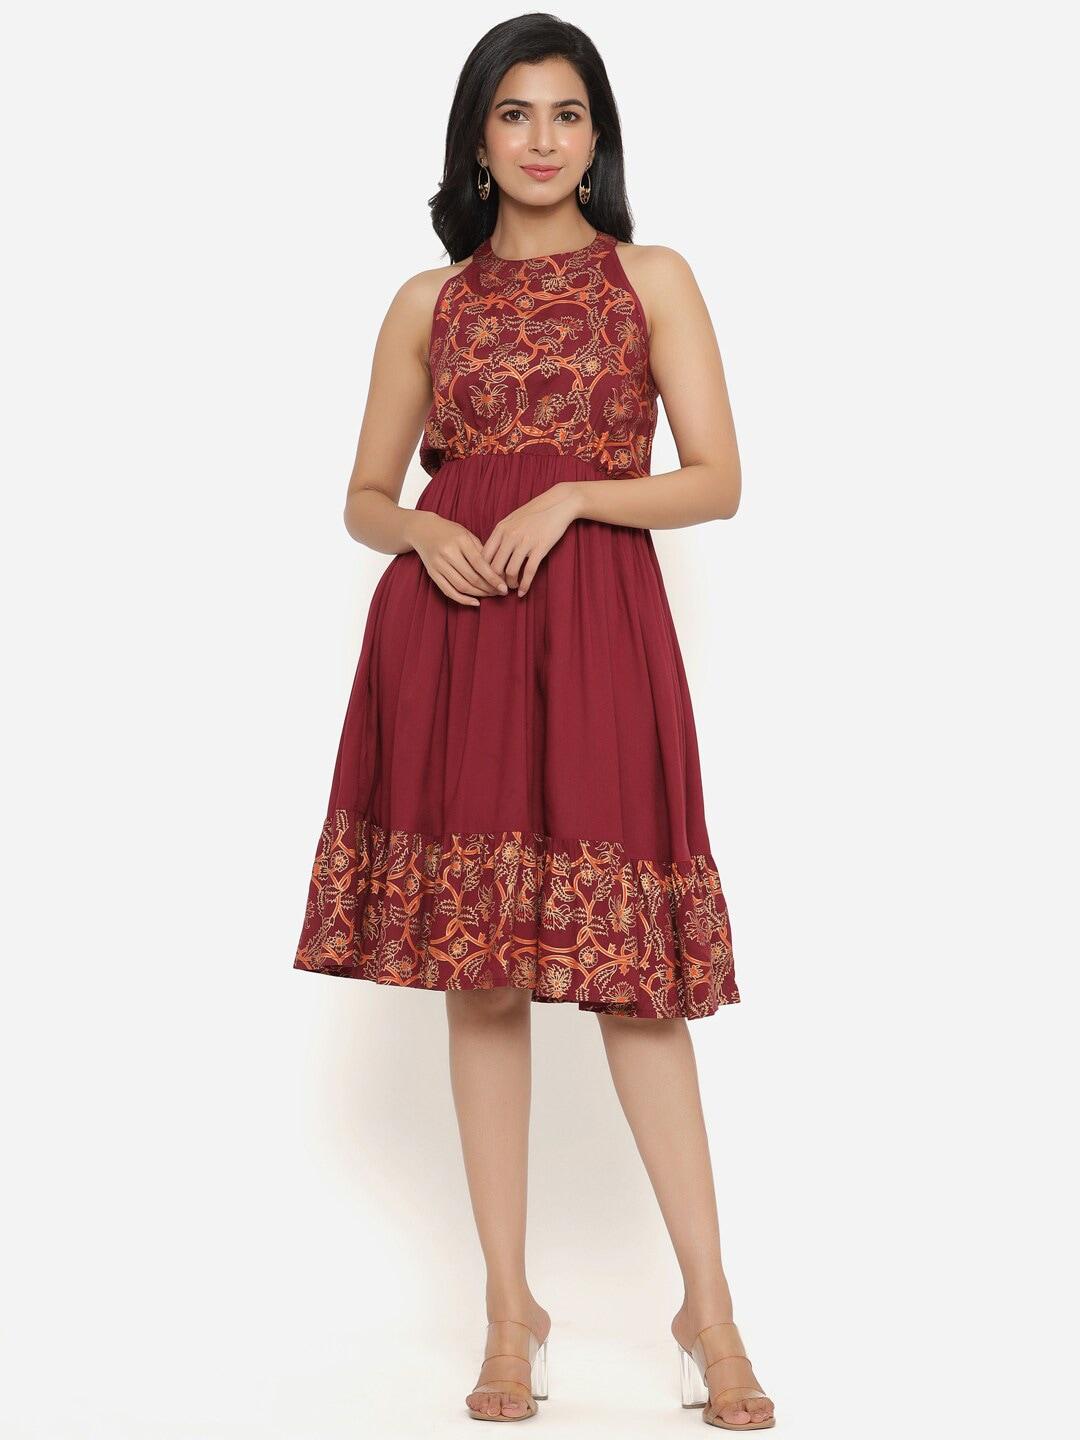 purshottam-wala-maroon-floral-halter-neck-dress